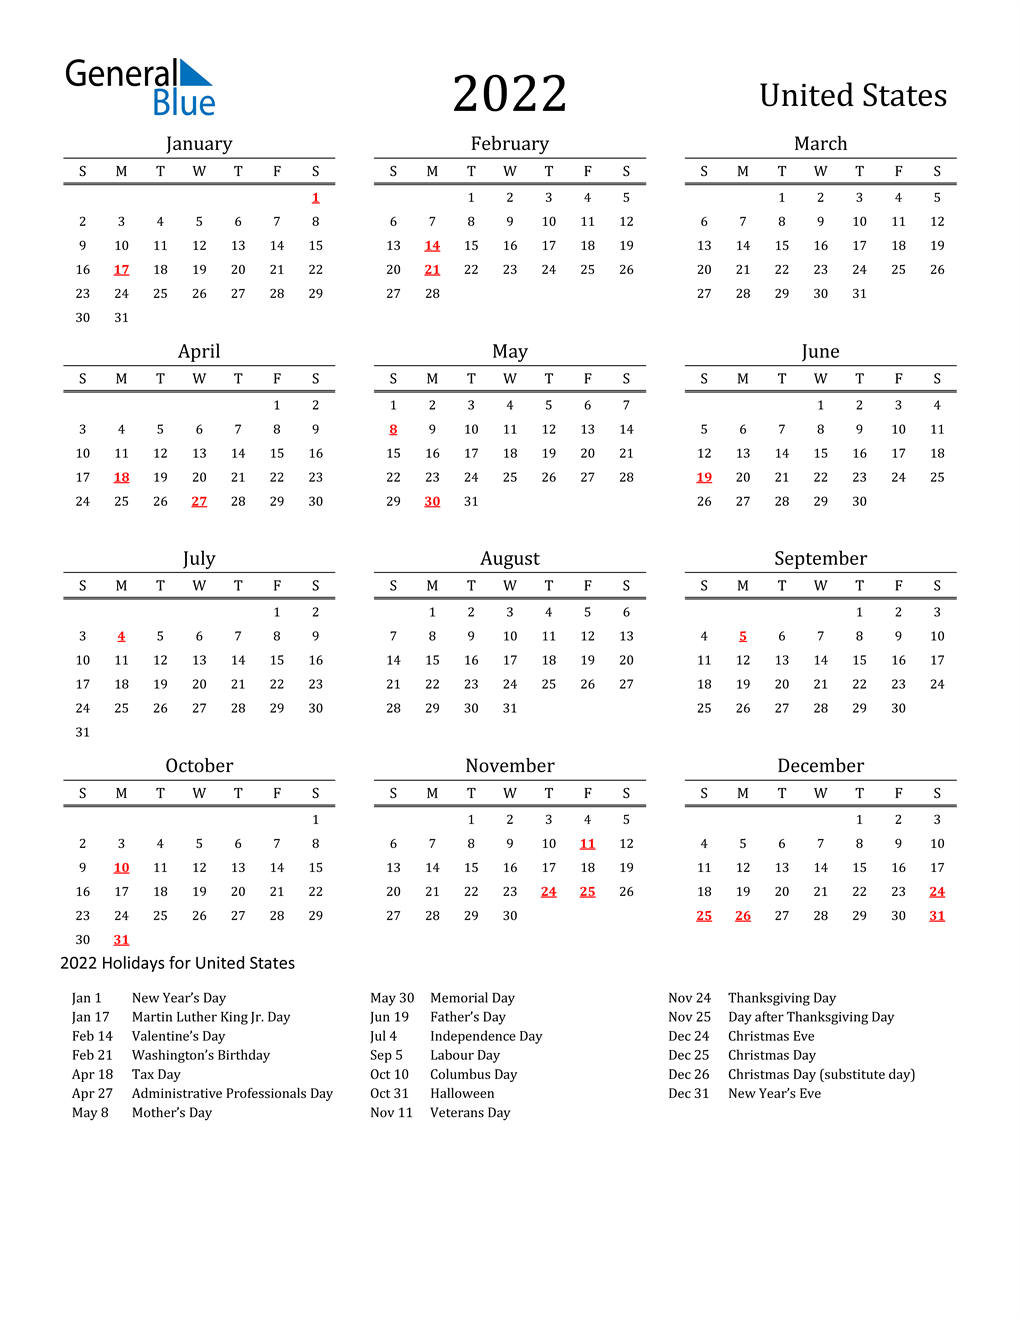 Sunday Only Calendar 2022 2022 United States Calendar With Holidays